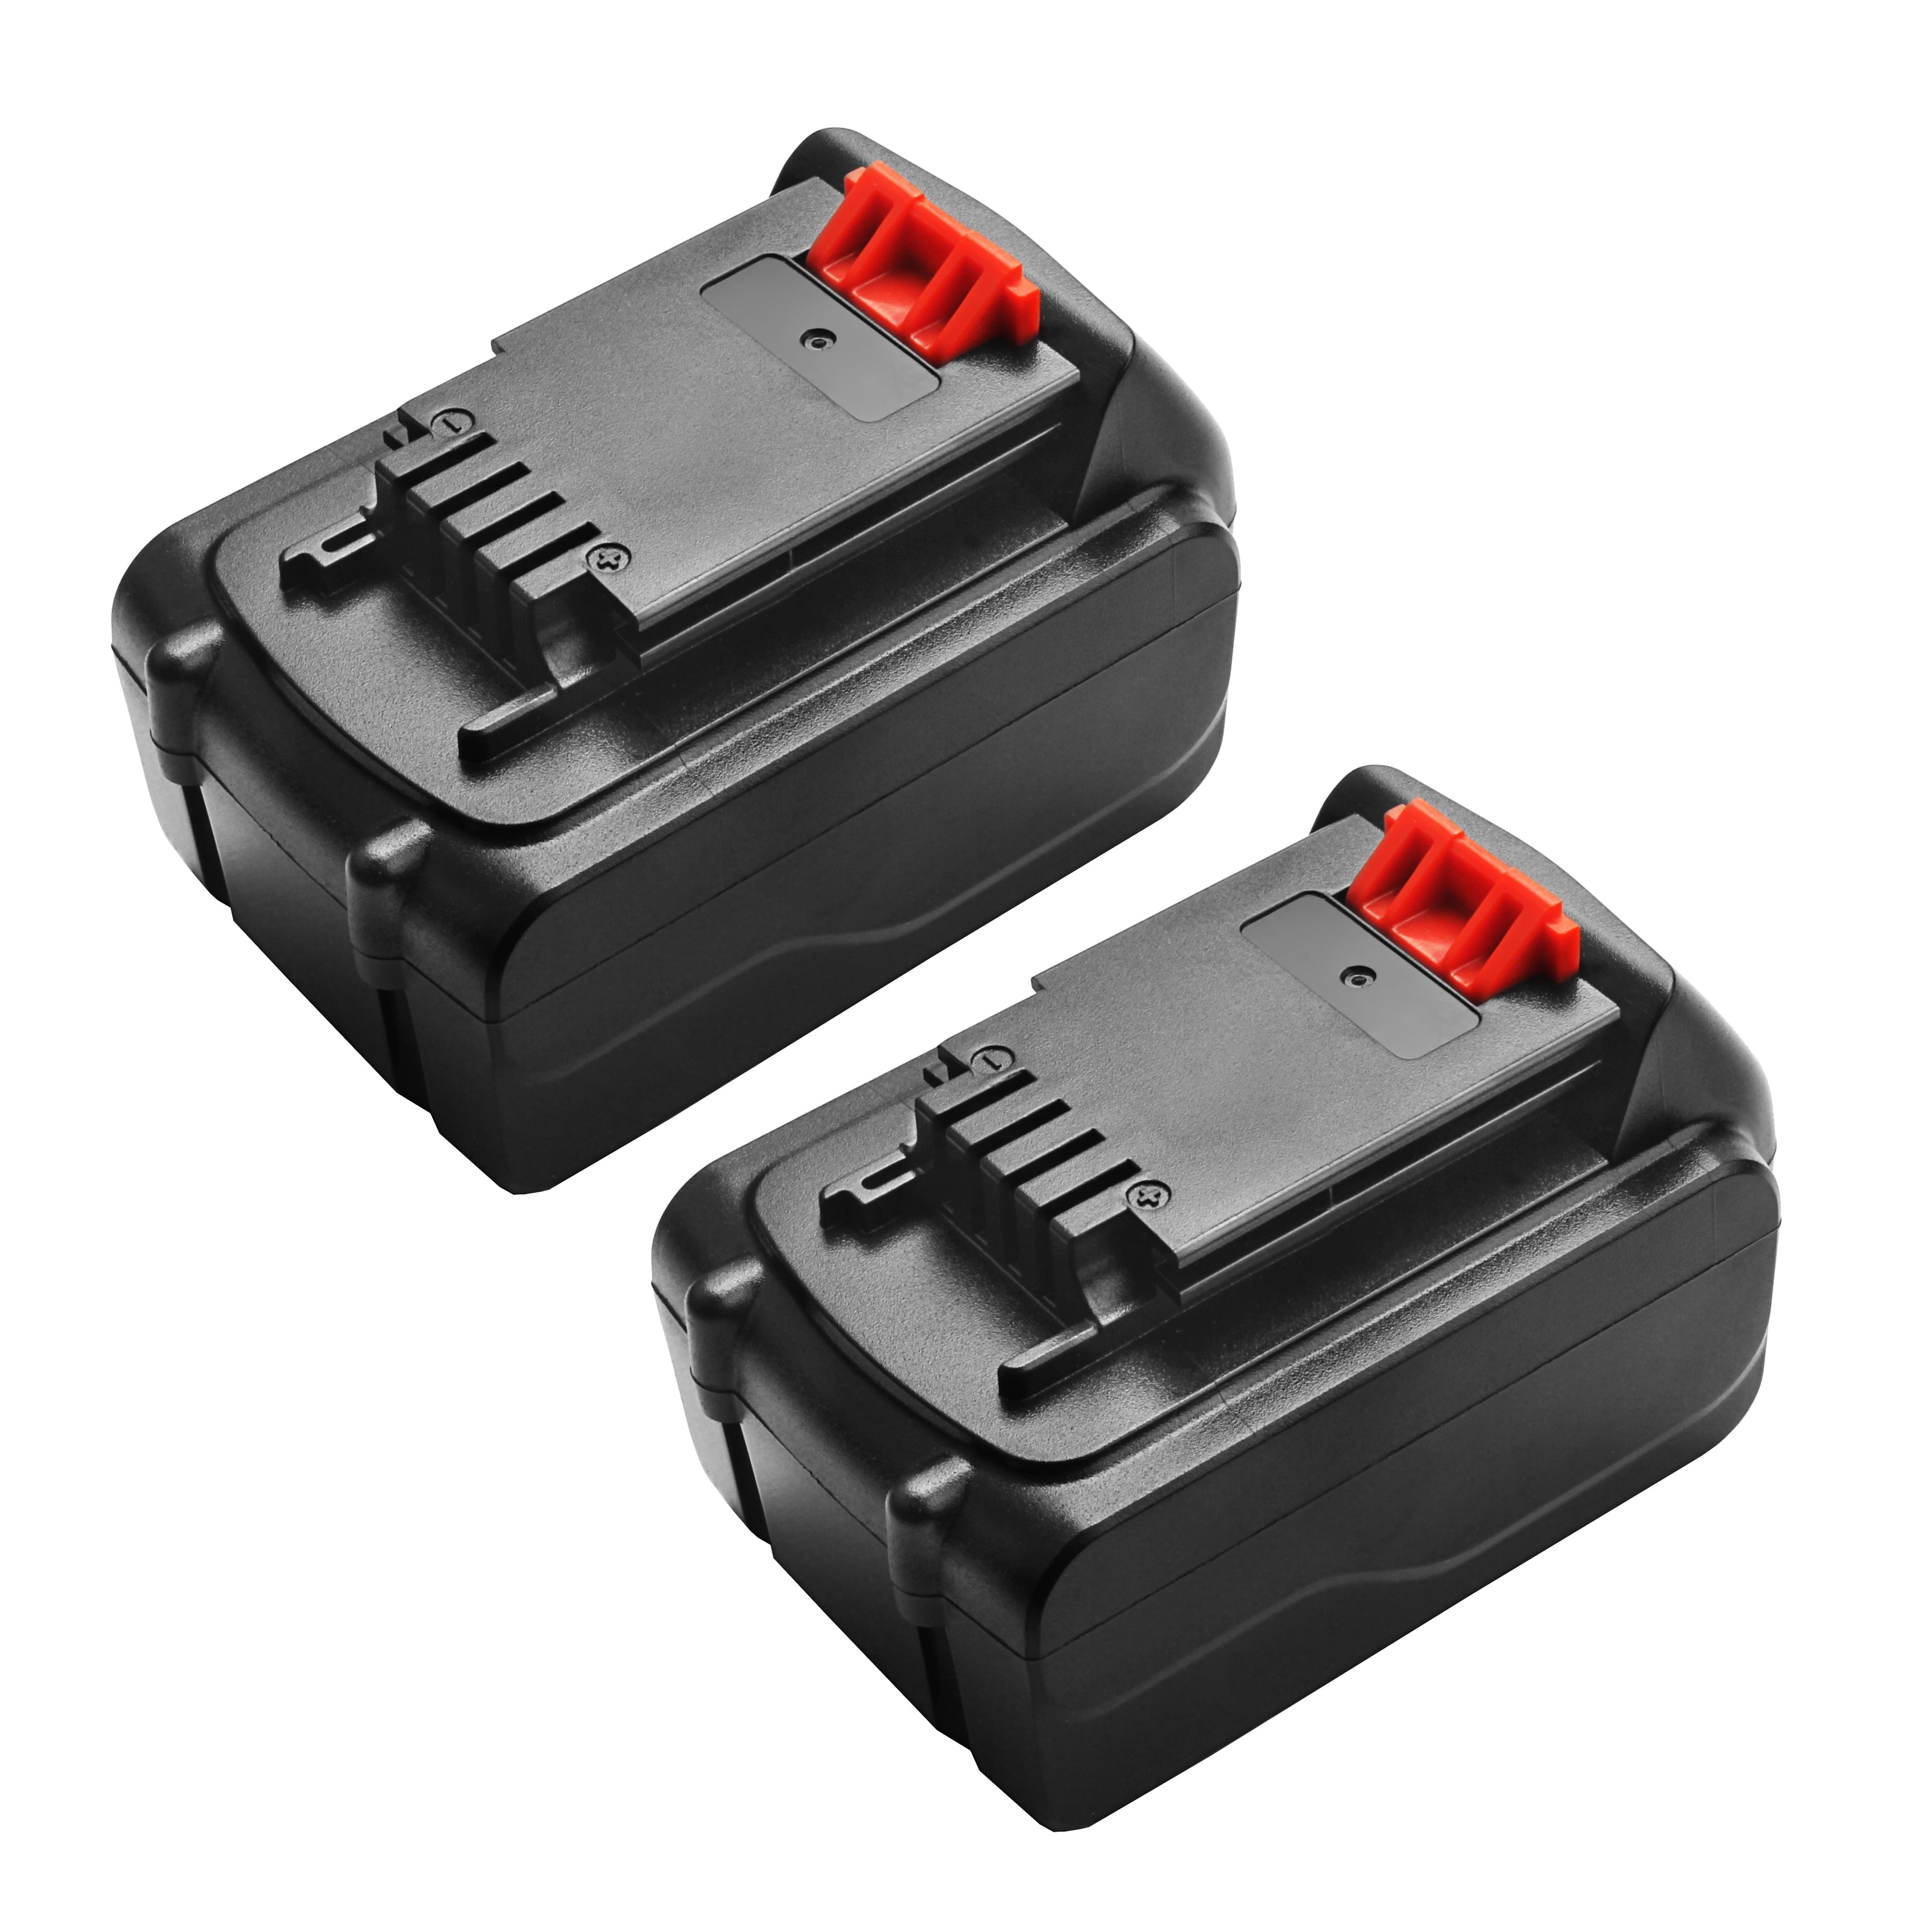 20V 7.0Ah for Black & Decker LBXR20 Lithium Battery Charger LB2X4020 LBXR20-OPE 